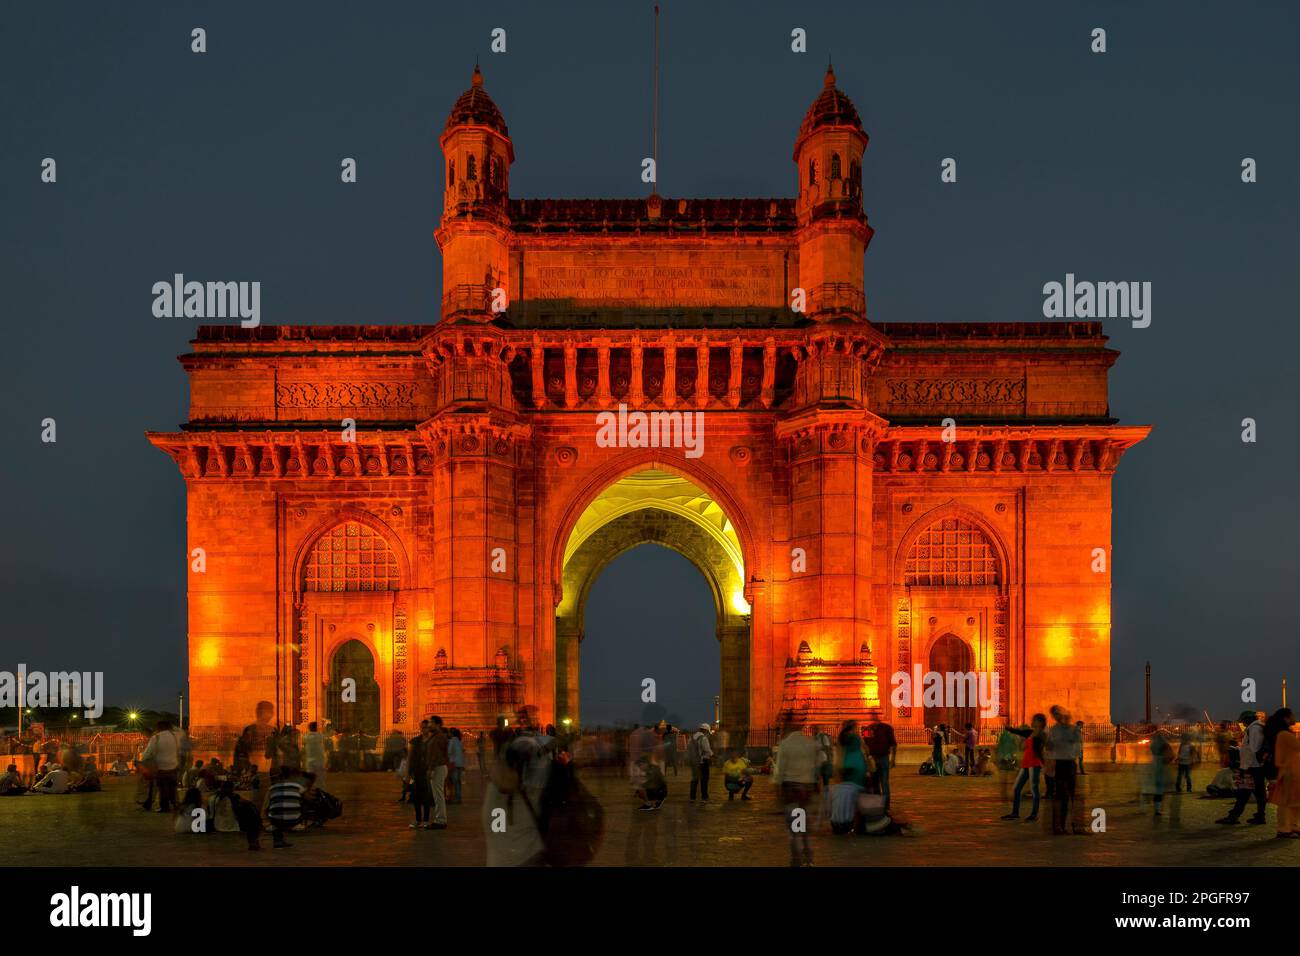 Gateway to India, Mumbai, India Stock Photo - Alamy 